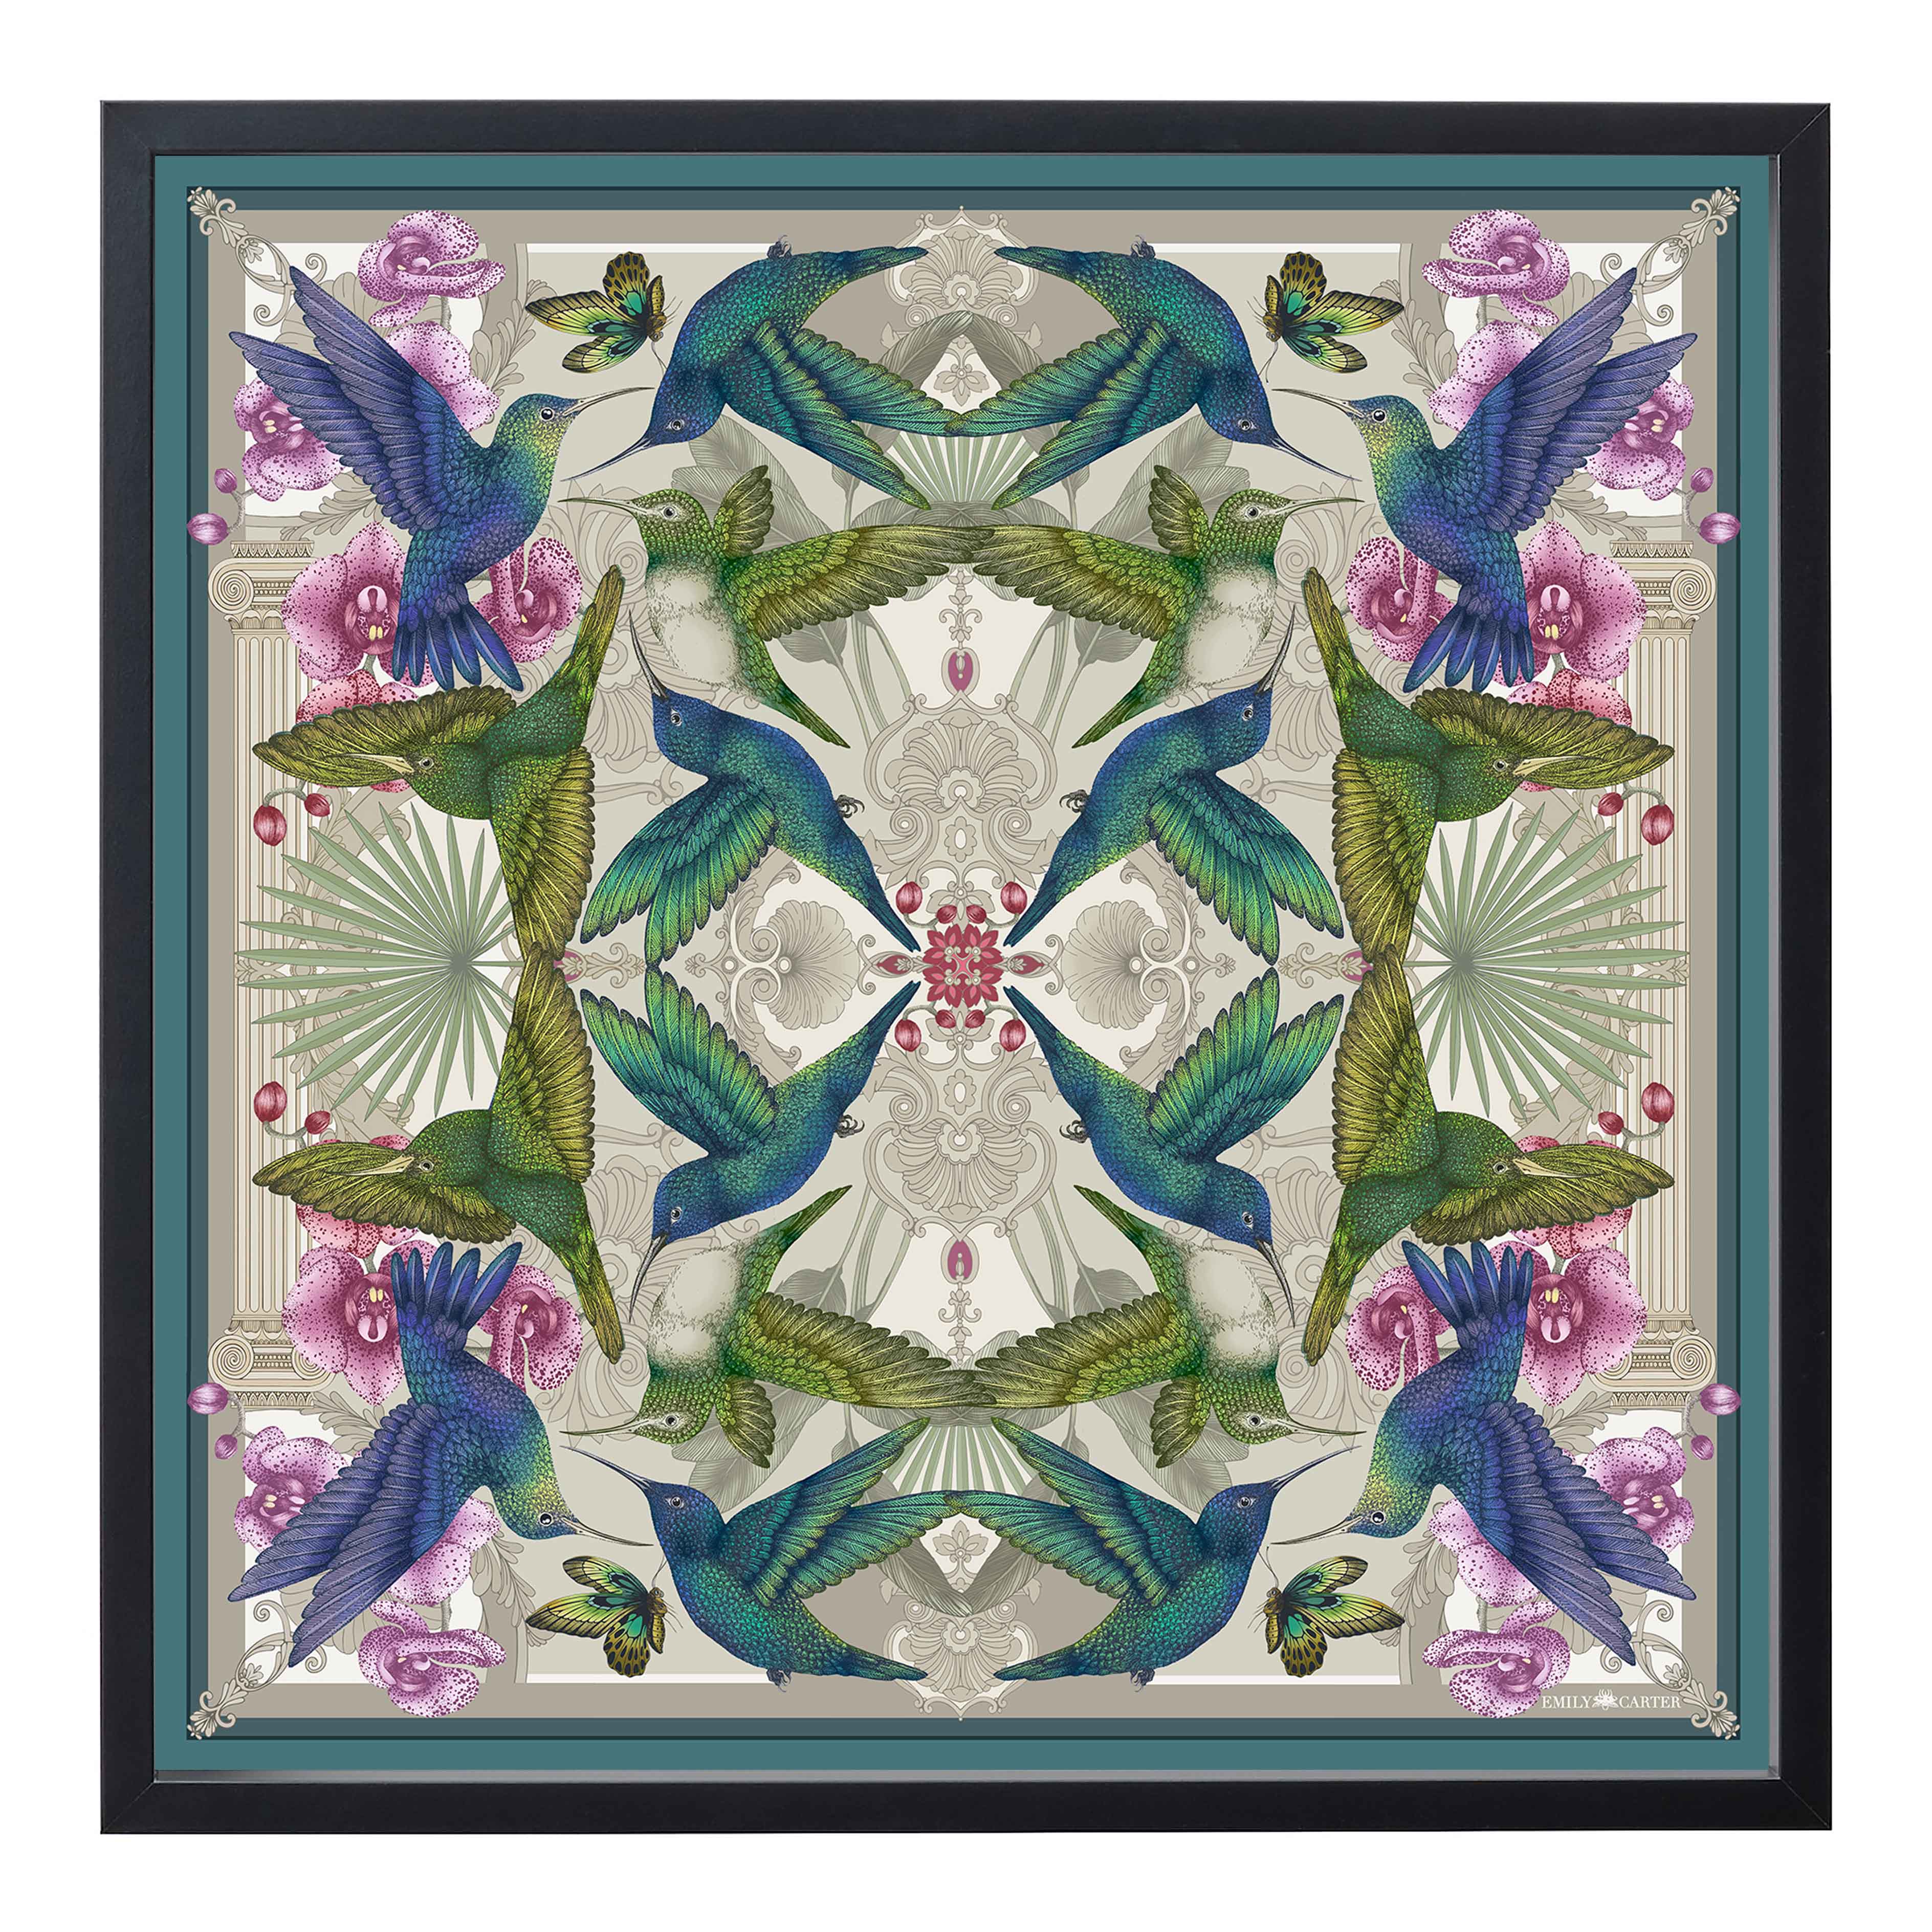 'Hummingbird Temple' Giclée Print - Limited Edition